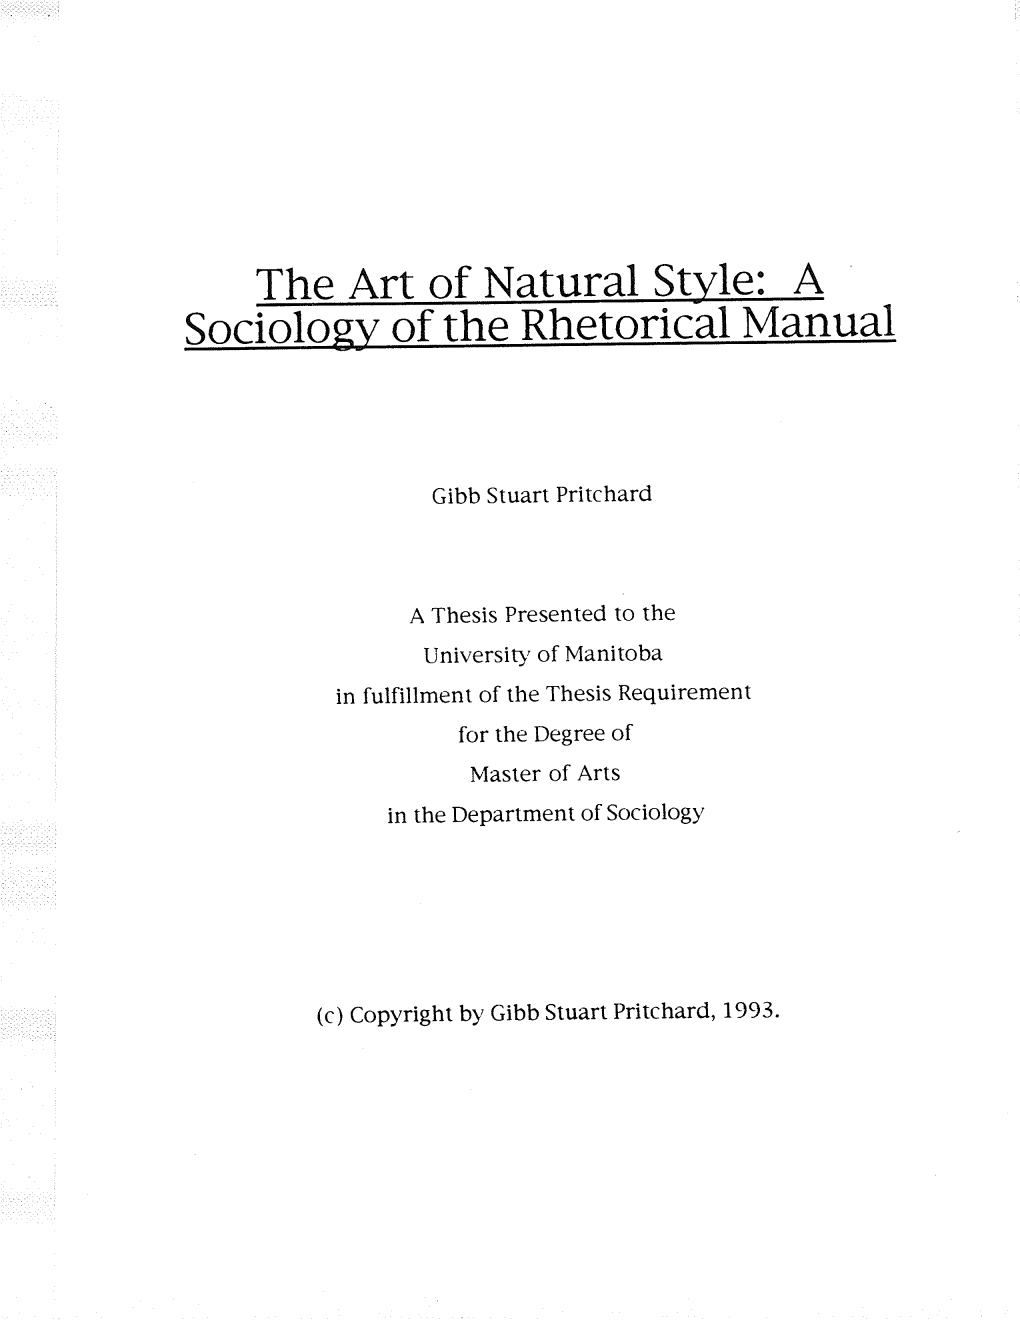 Art of Natural Le: a Soc Rhetorical Manual